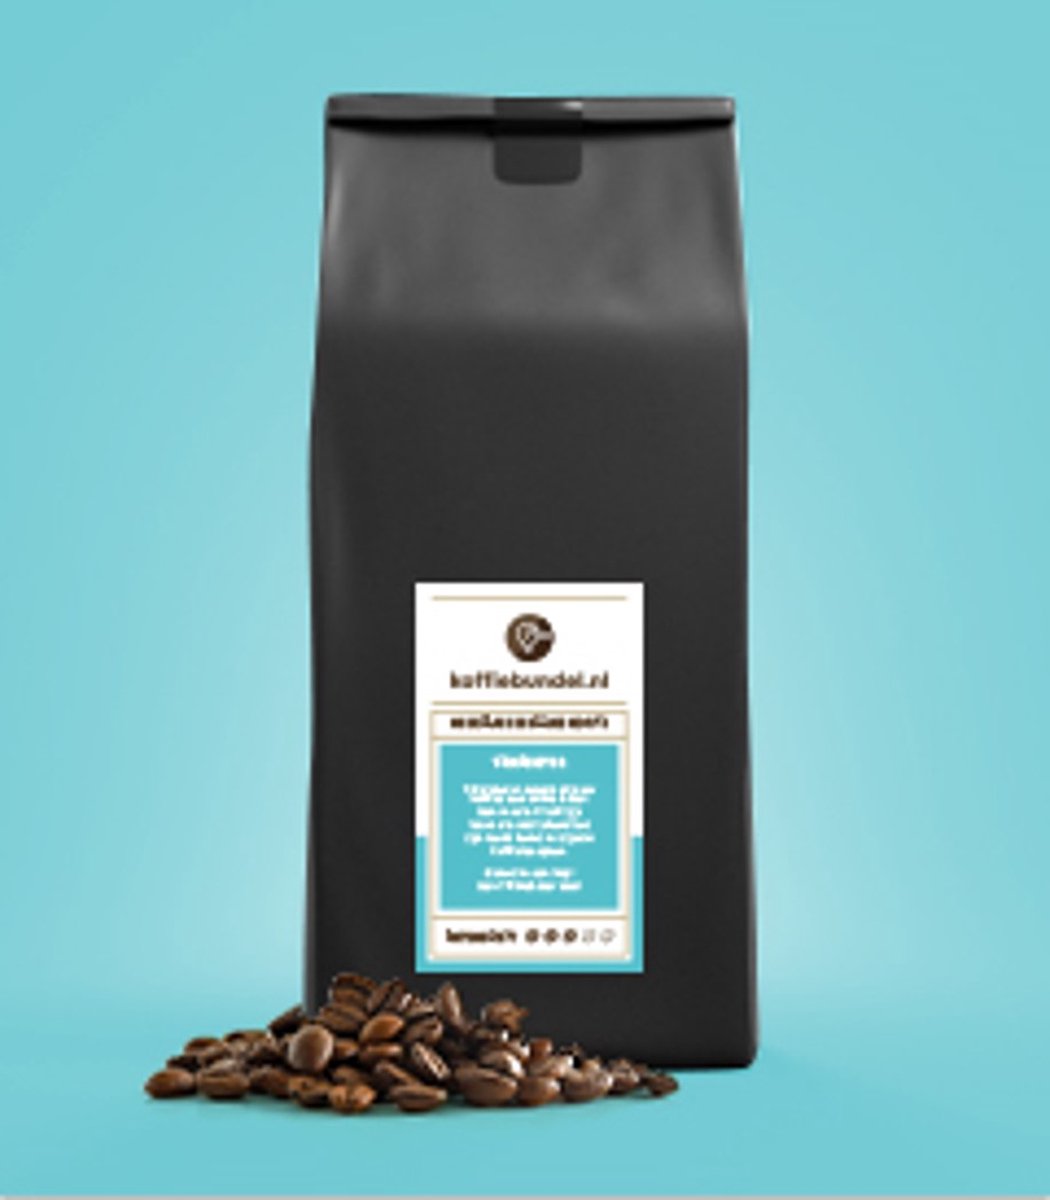 Koffiebundel -Professionele instant koffie - Arabica/Robusta melange - Tikkiebeter - 500 gram, goed voor zo'n 330 koppen koffie!